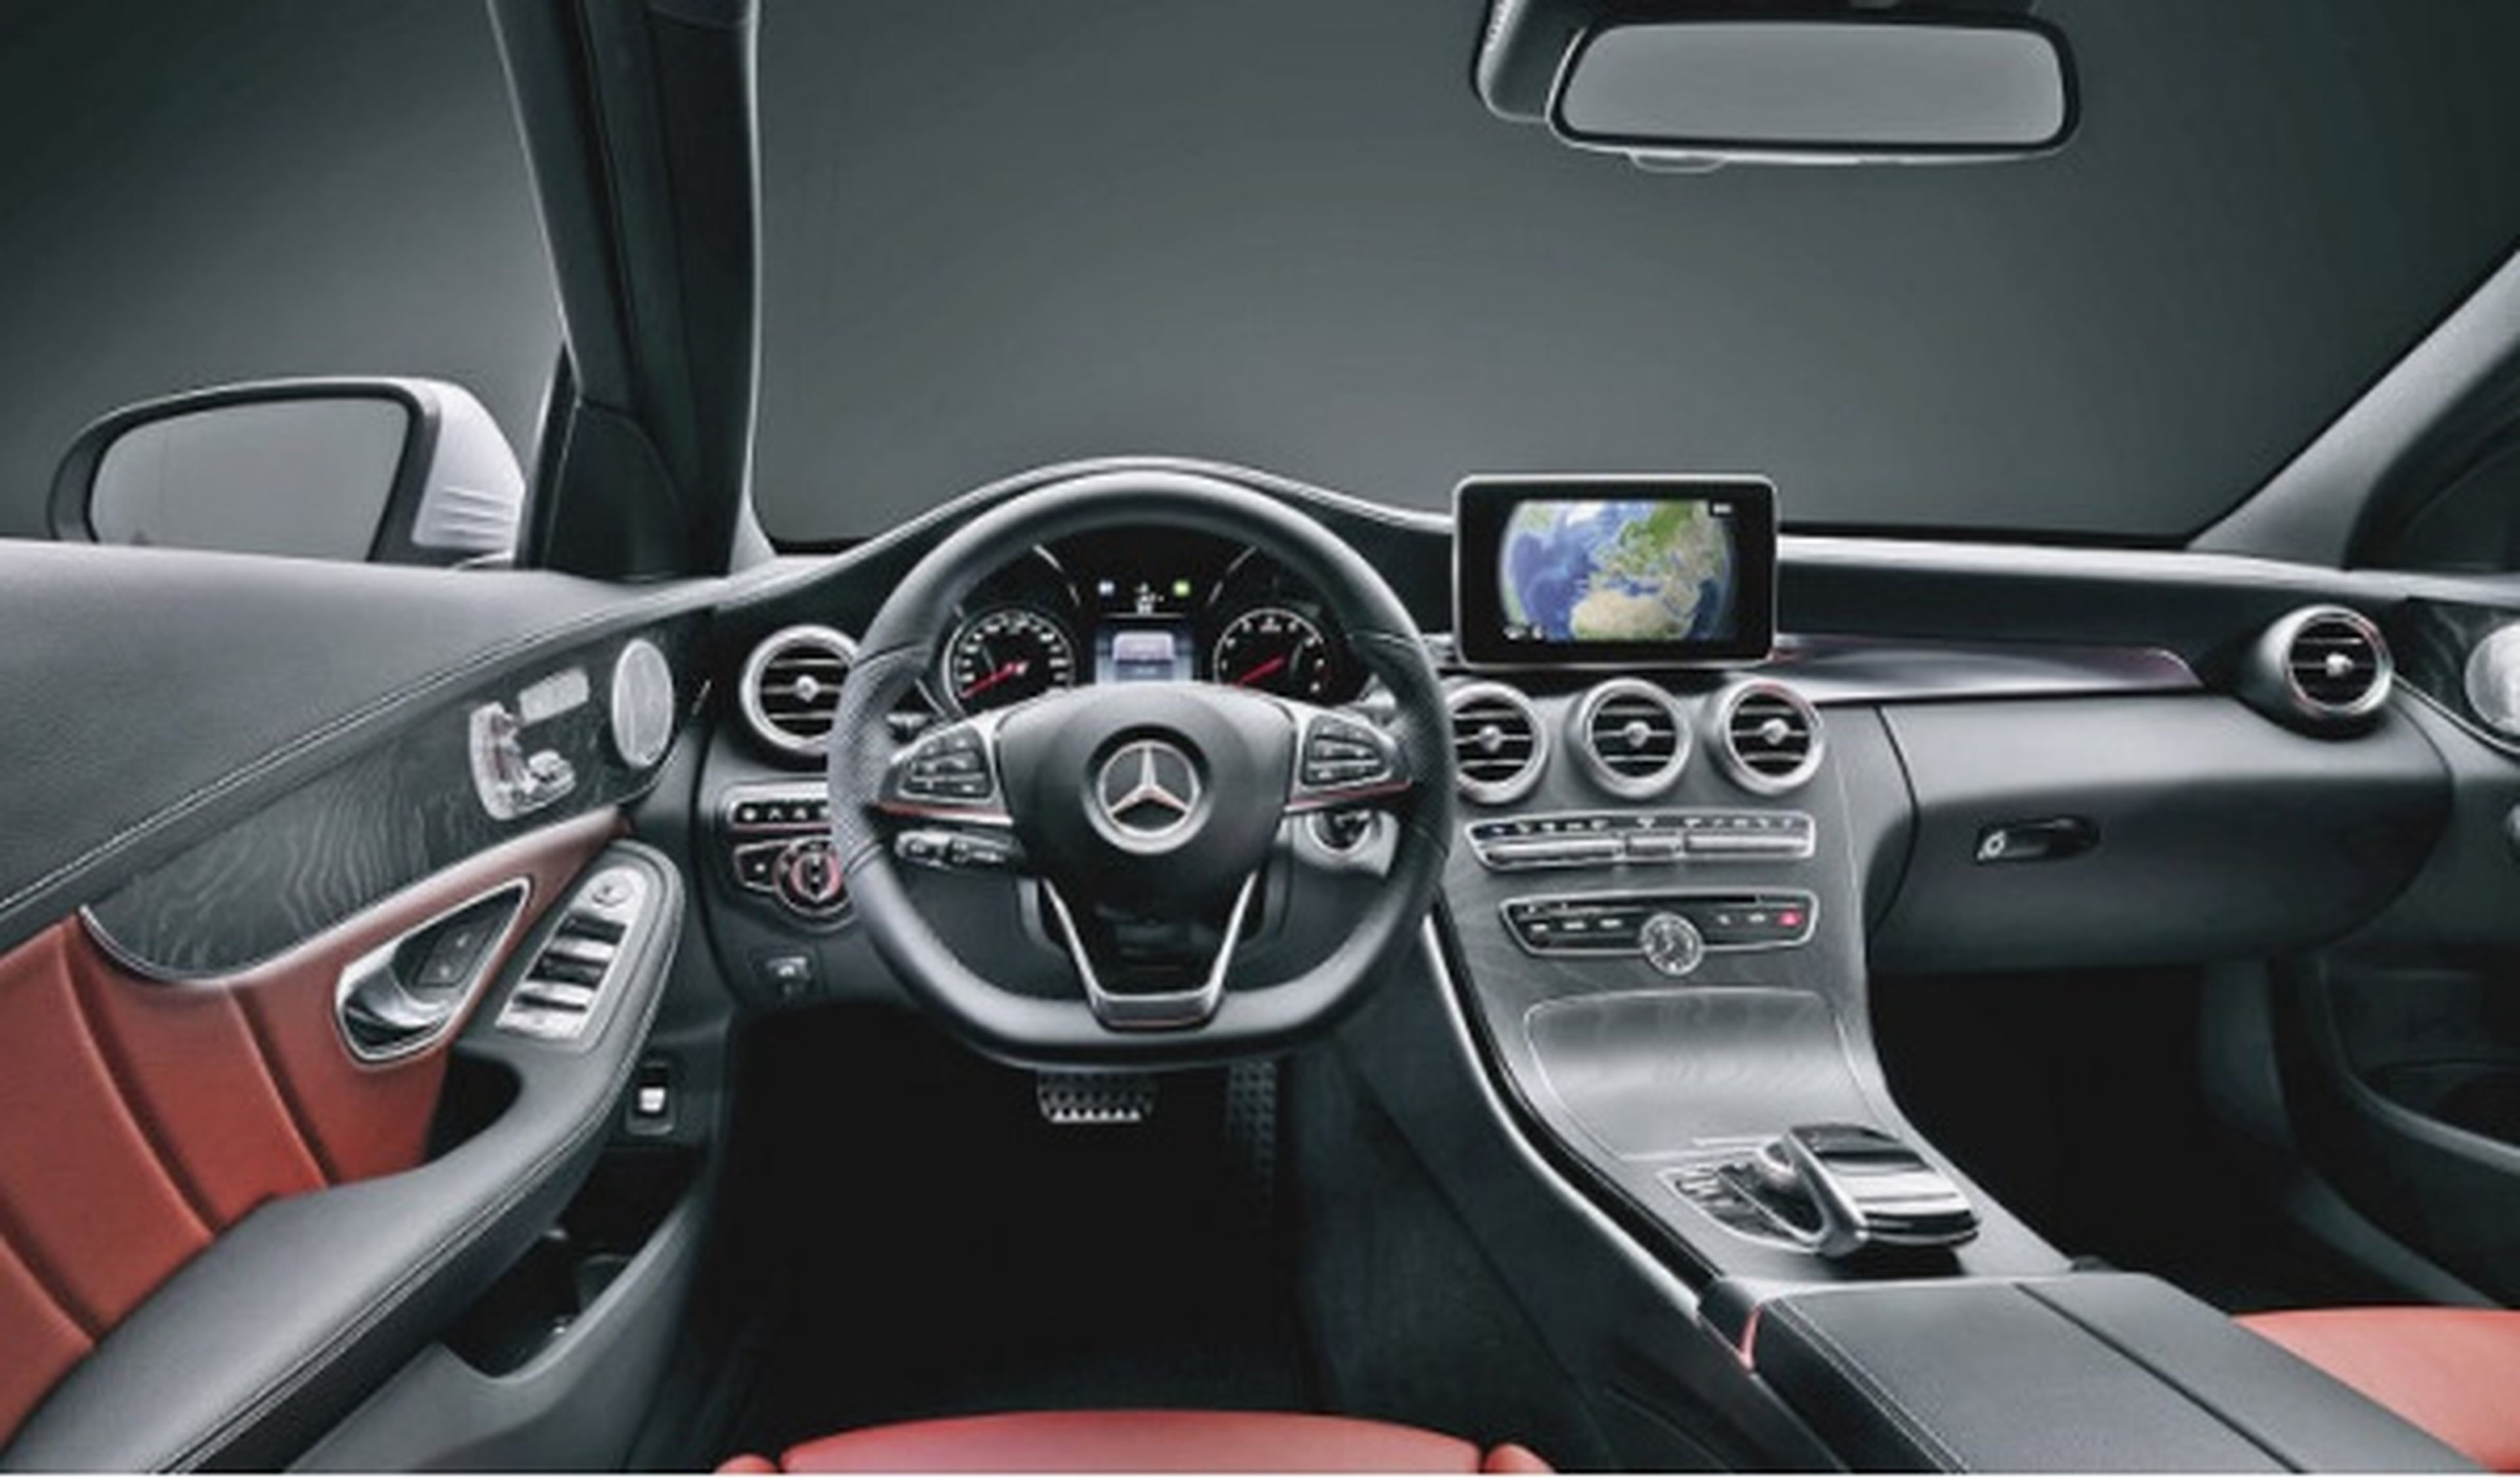 Revelado el interior del Mercedes Clase C 2014